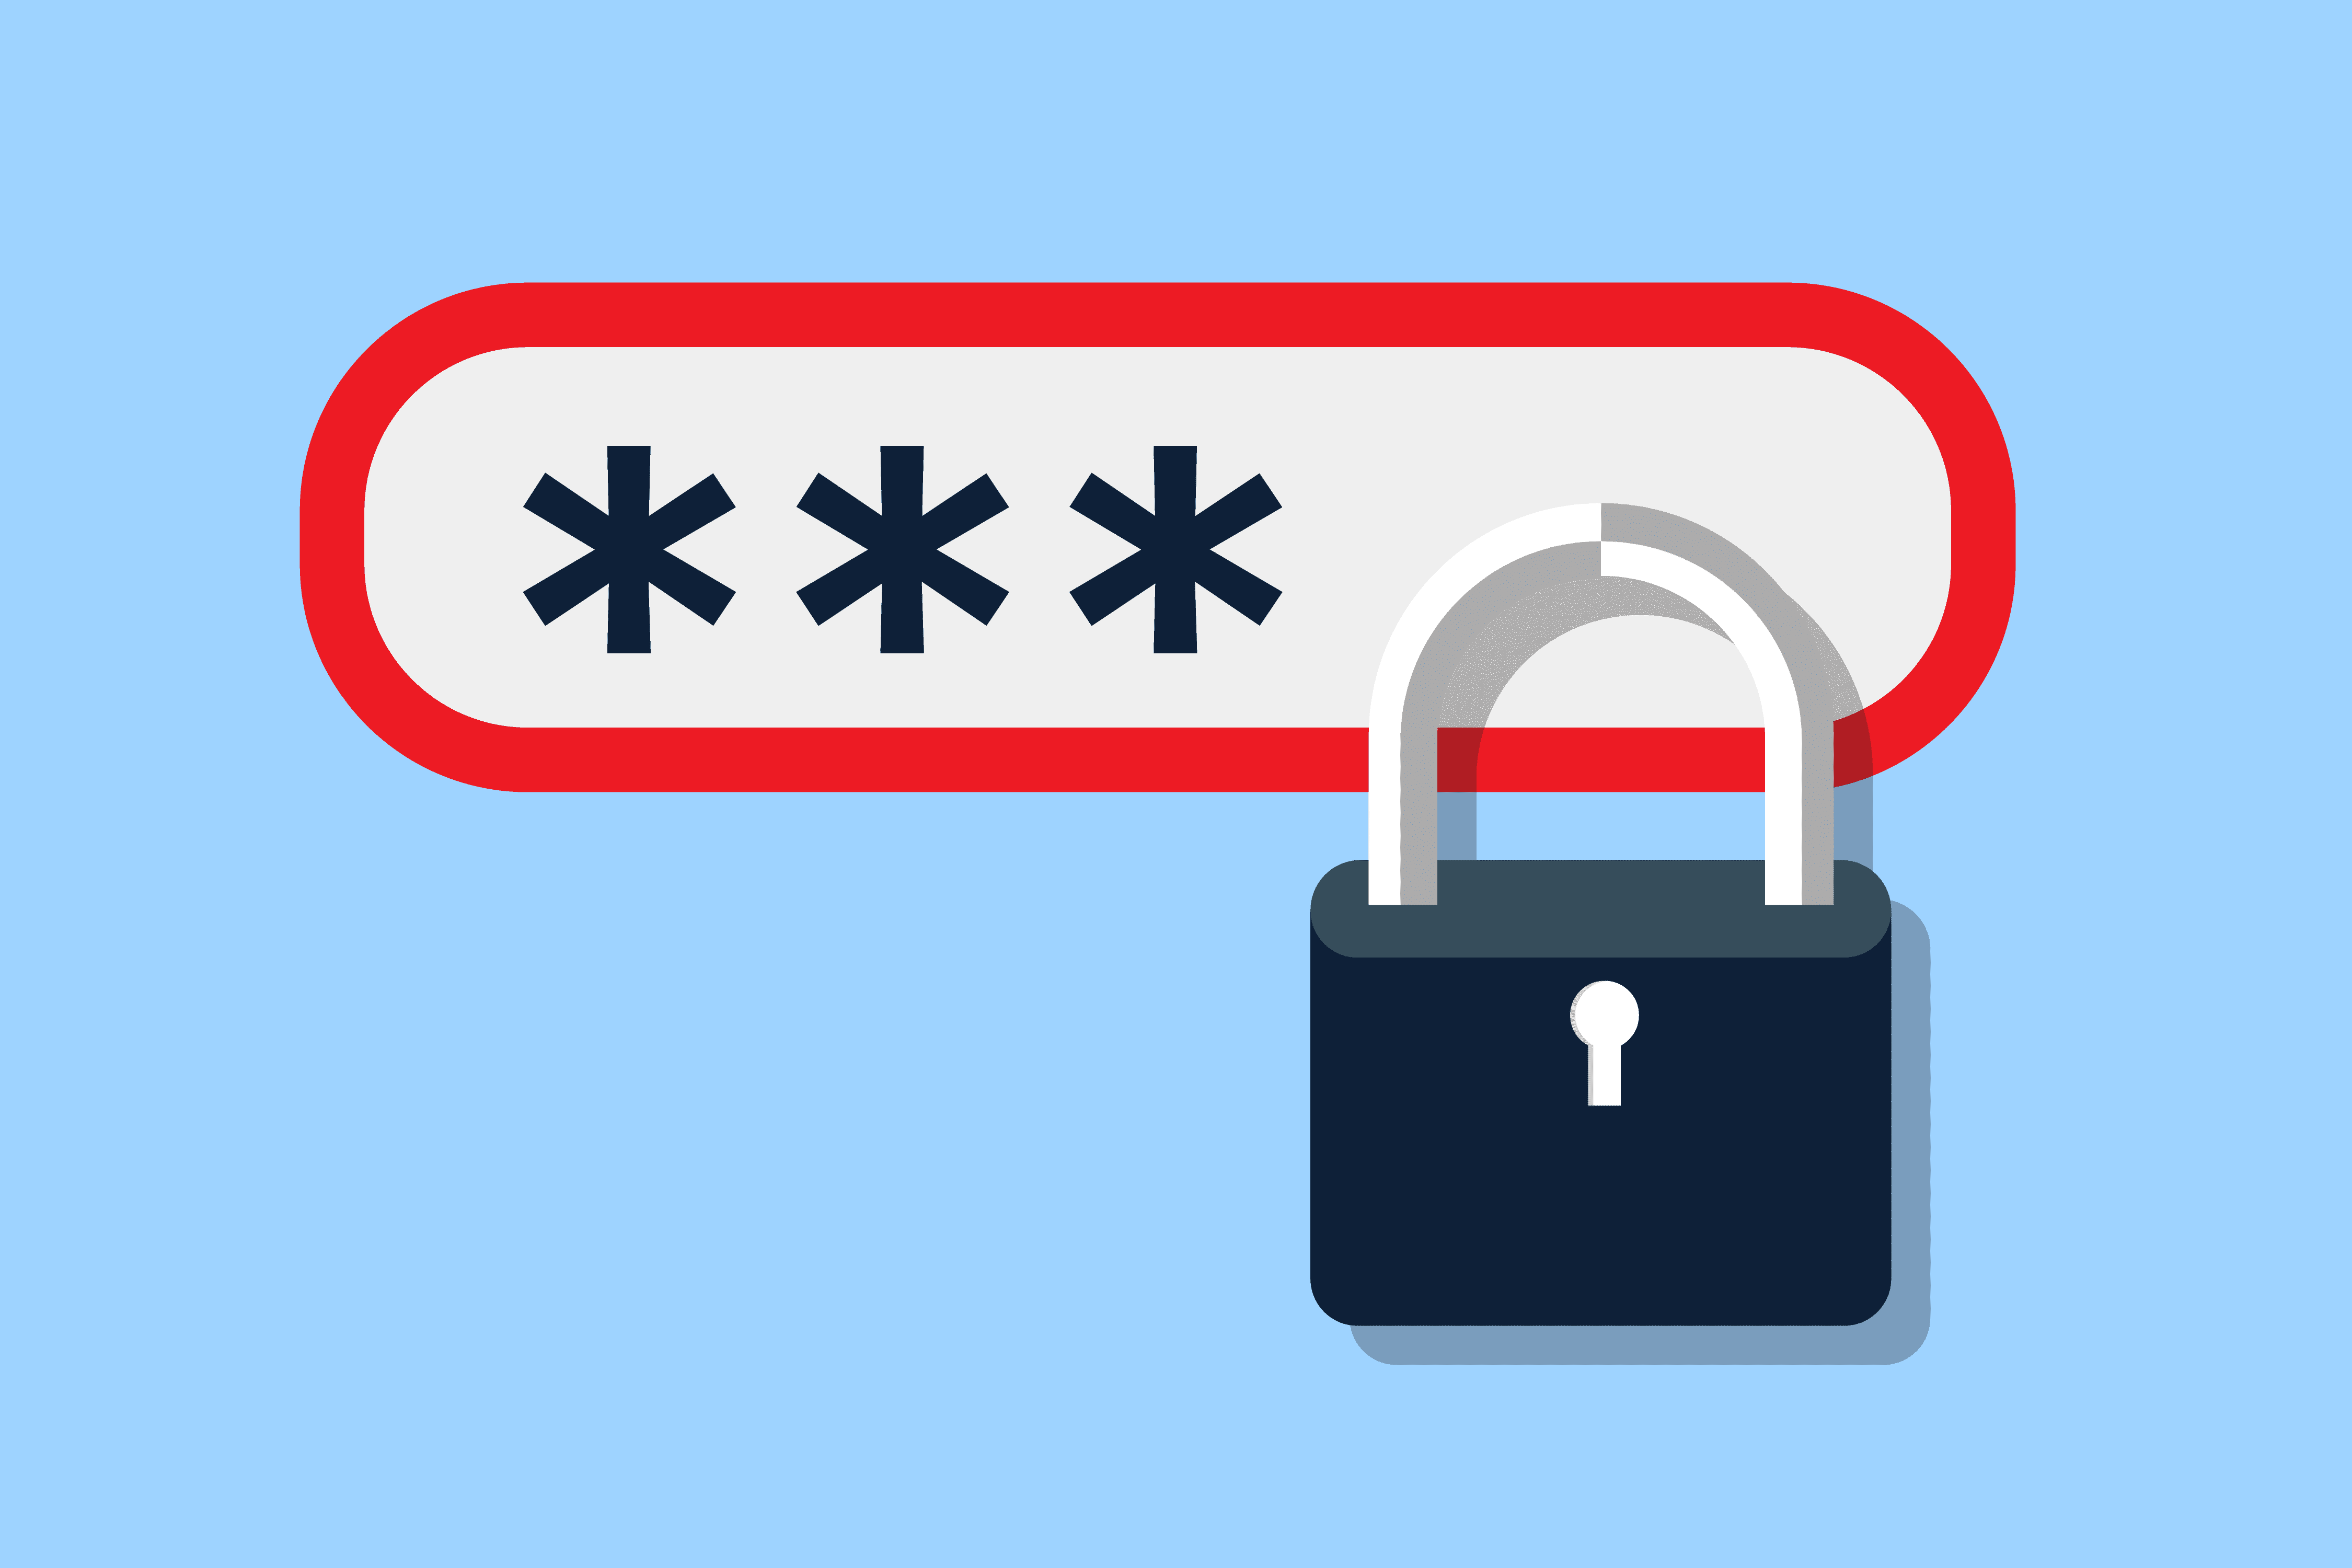 How to Change Internet Password?